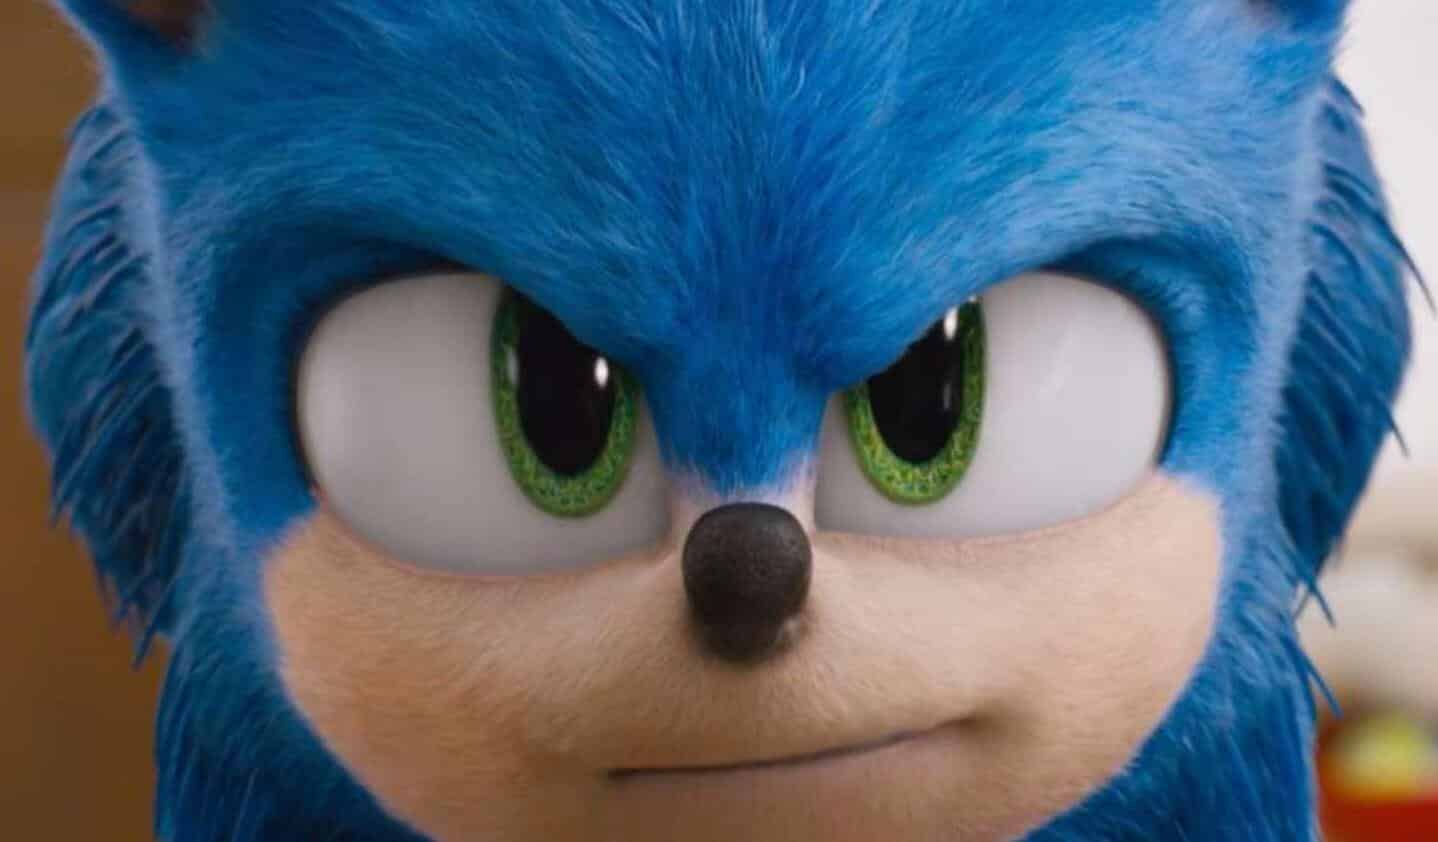 sonic the hedgehog 2 movie trailer